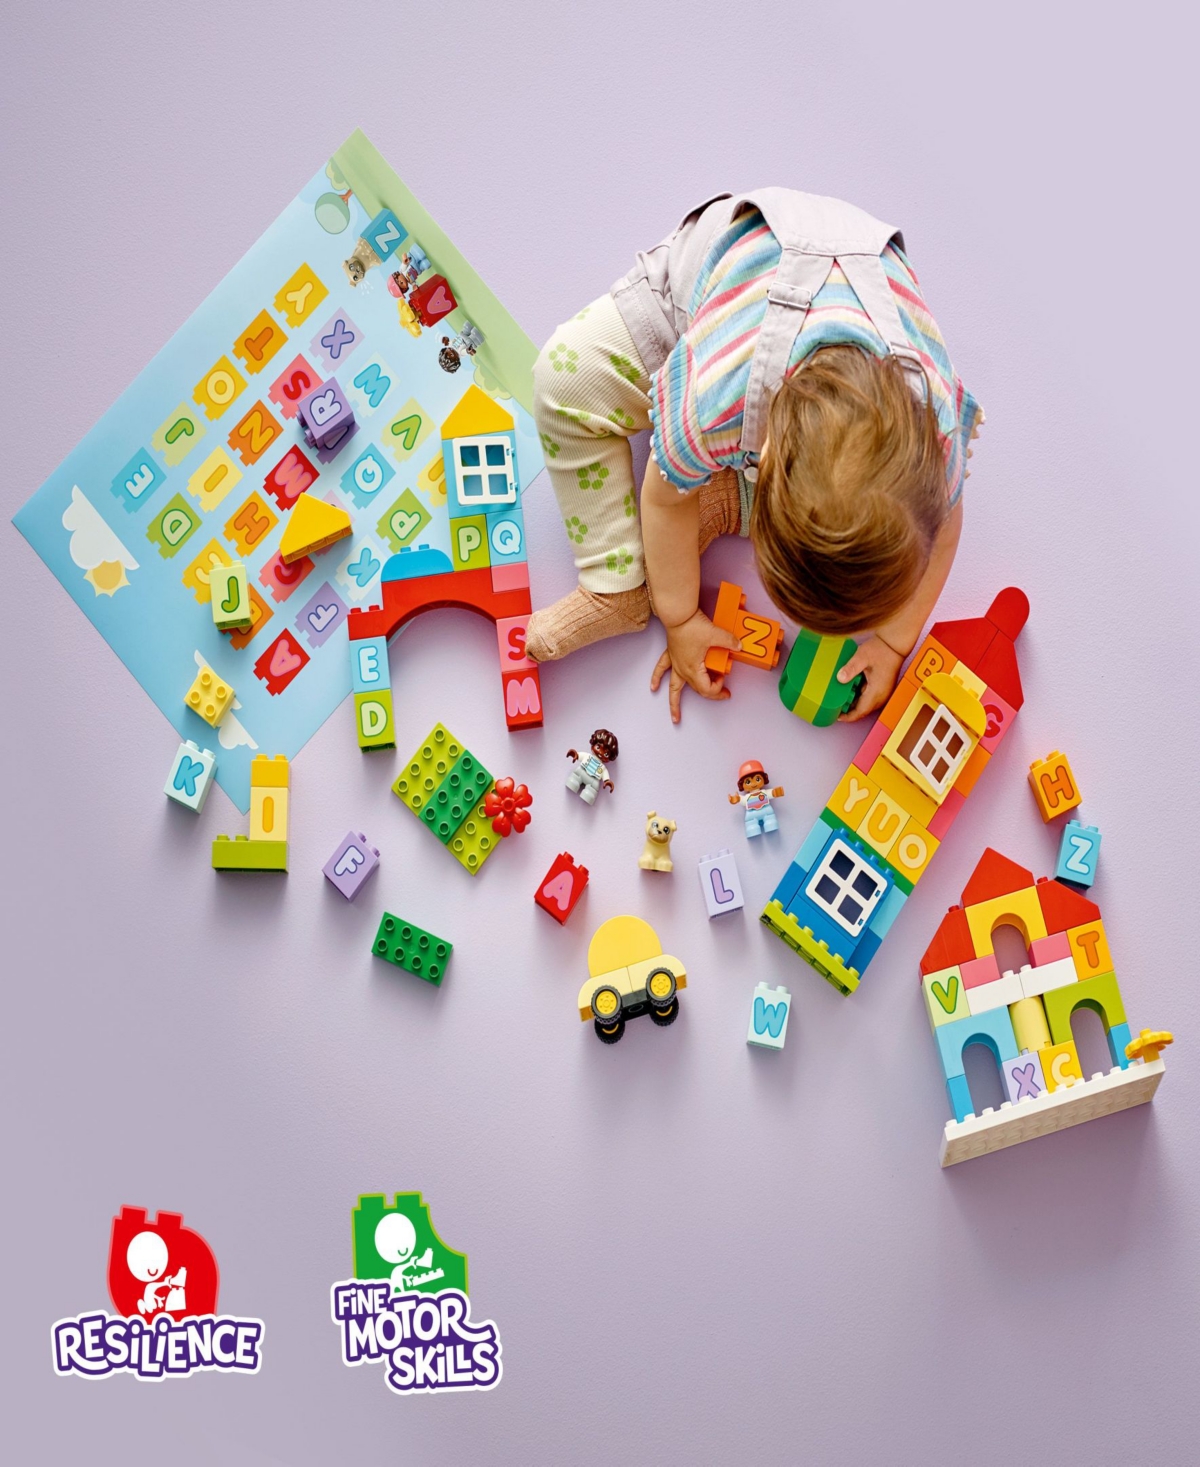 Shop Lego Duplo 10935 Classic Alphabet Town Toy Building Set In Multicolor